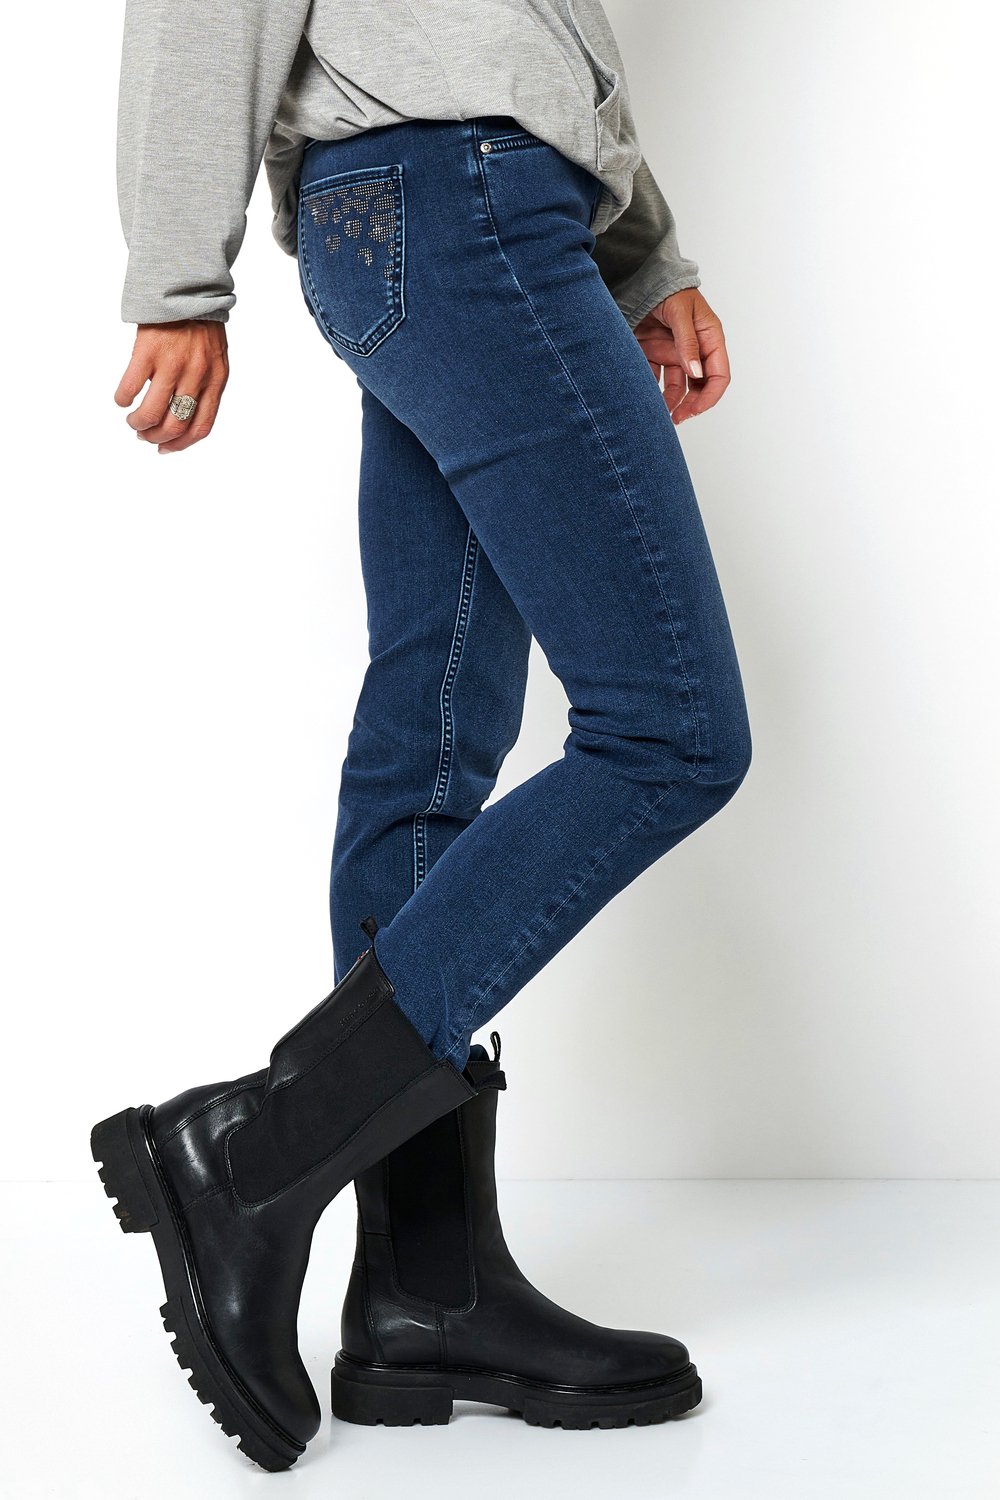 Damen-Jeans "Perfect Shape Skinny" aus Satin Touch Denim